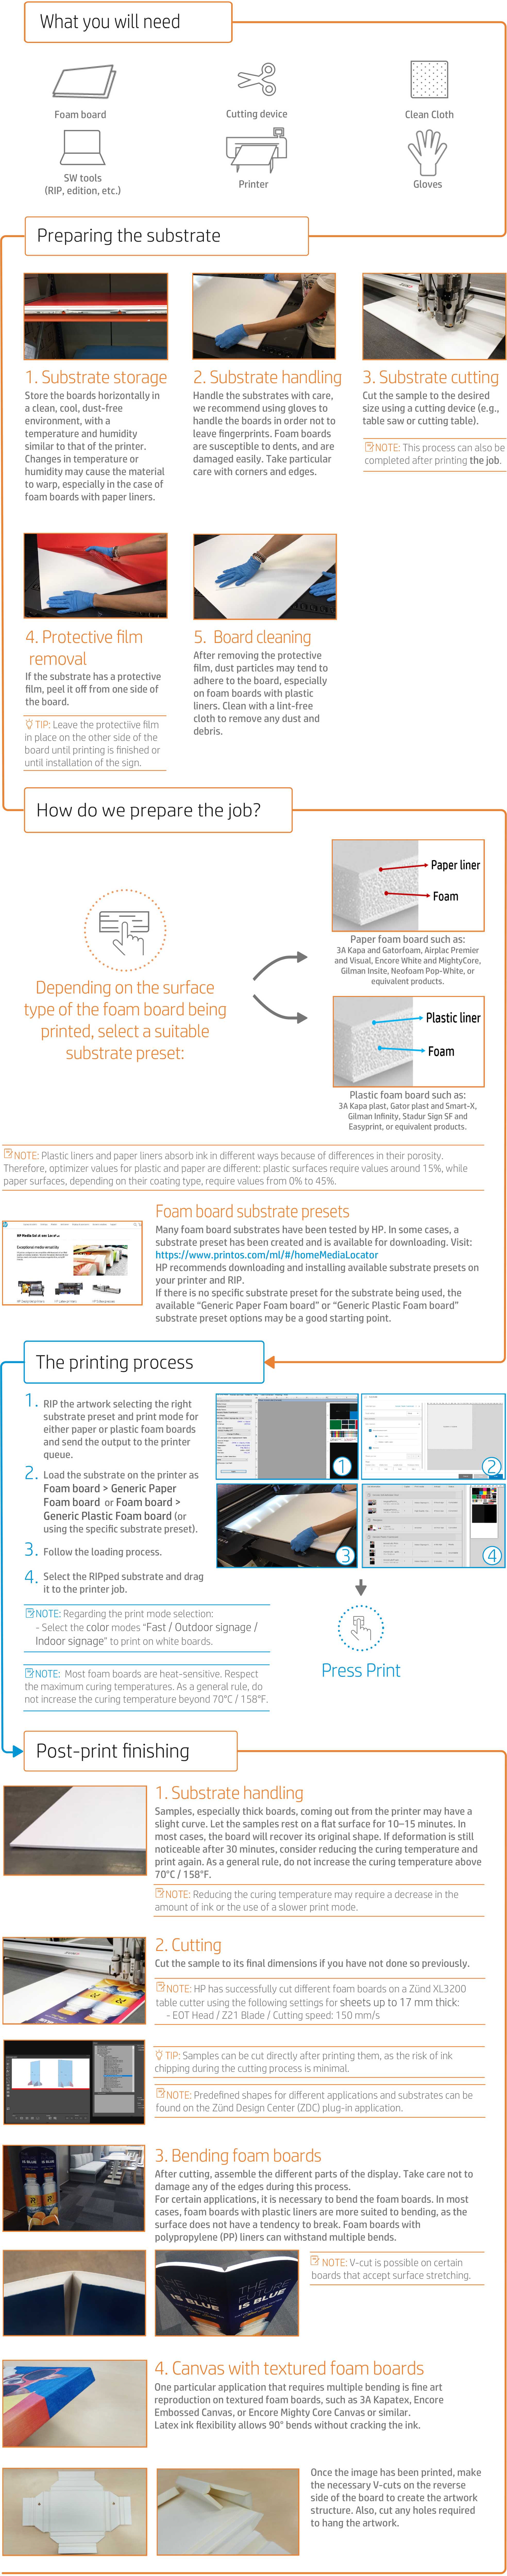 HPLatex_RSeries_how to print on foam